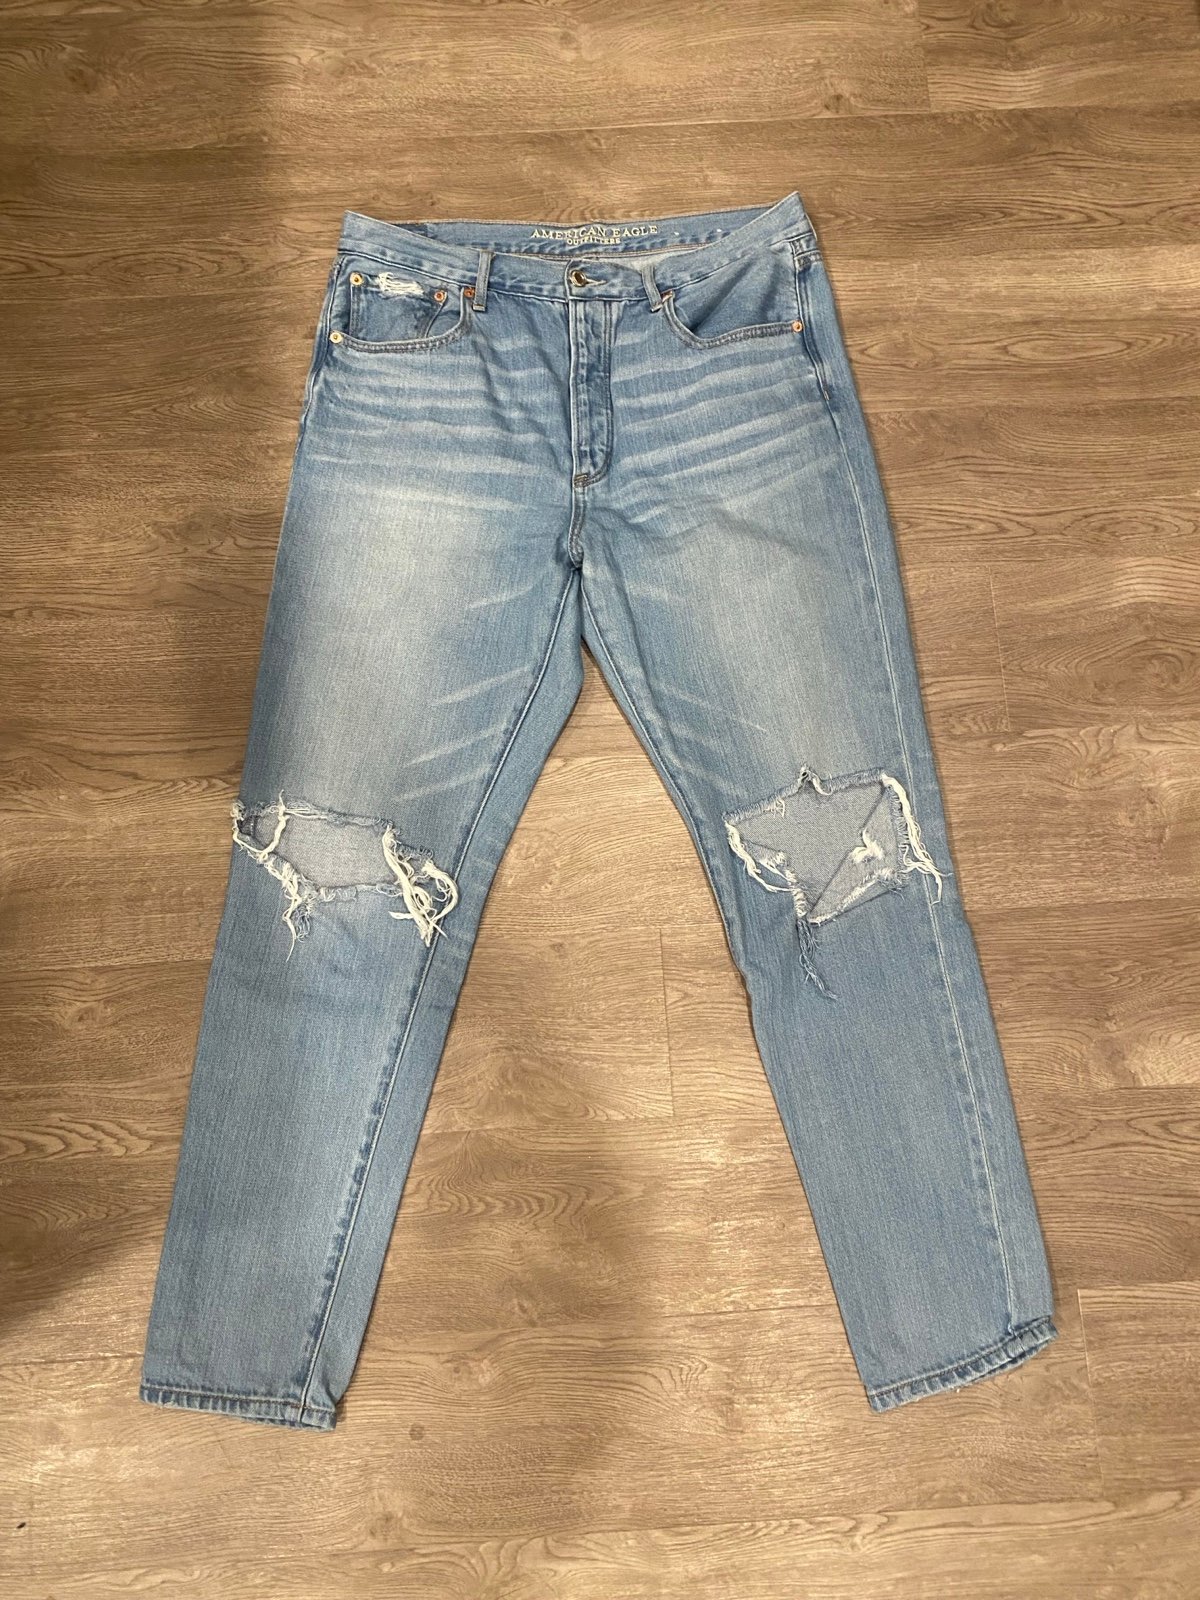 Fashion American Eagle Light Wash Hi-Rise Jeans Size 12